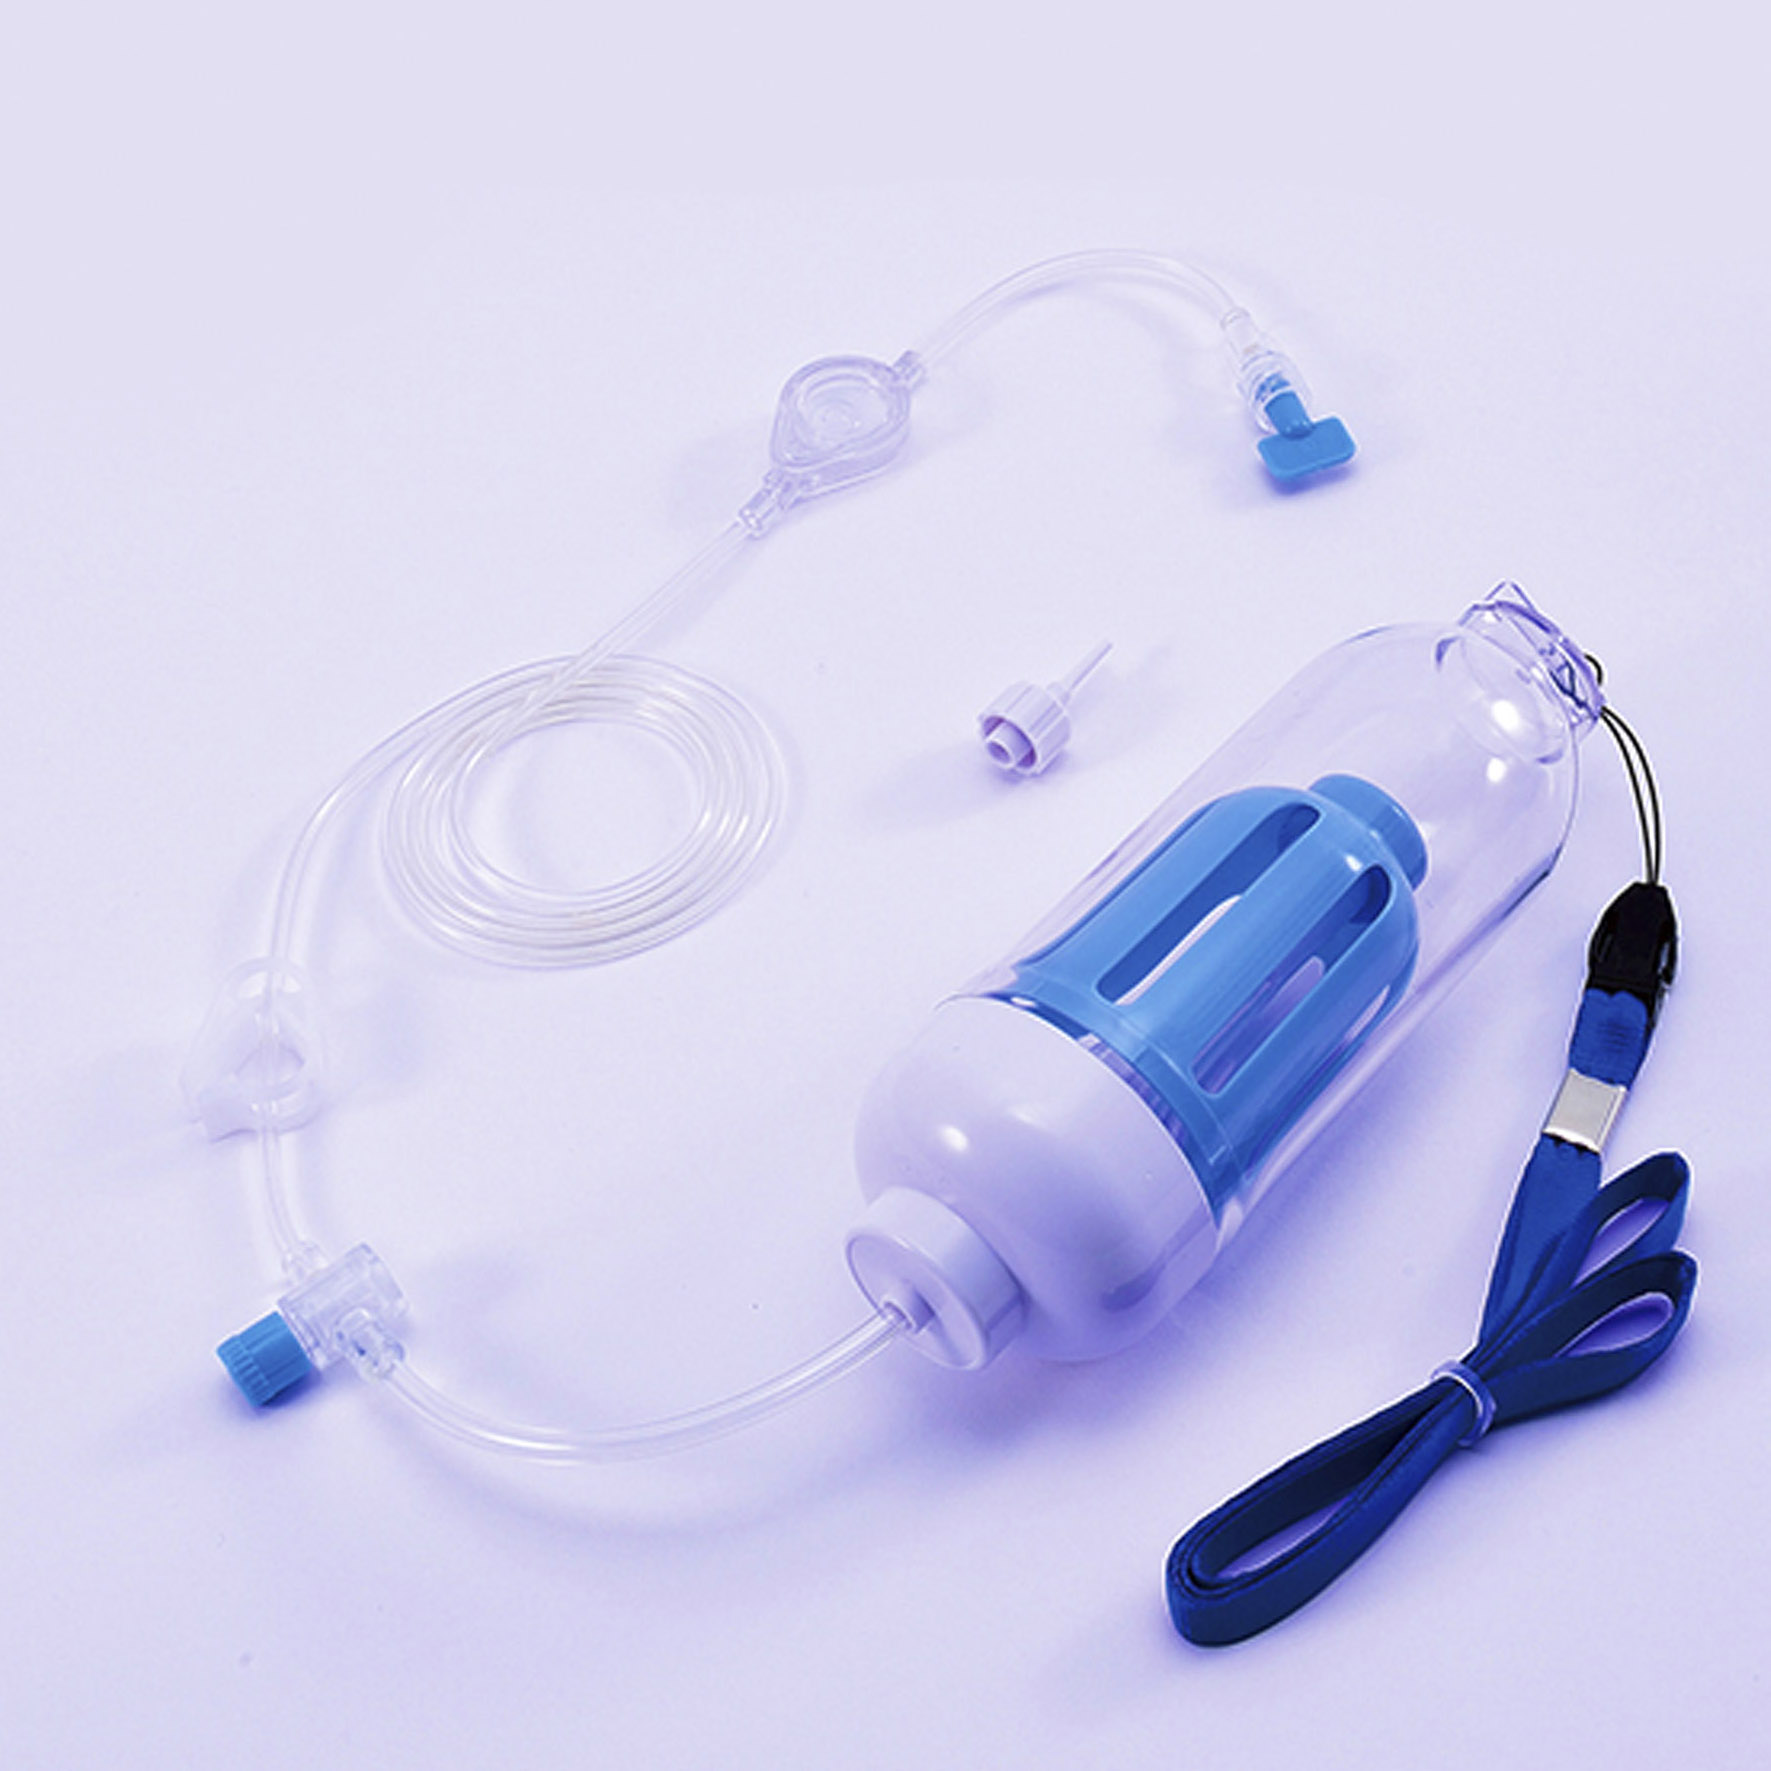 infusion-pump-820834